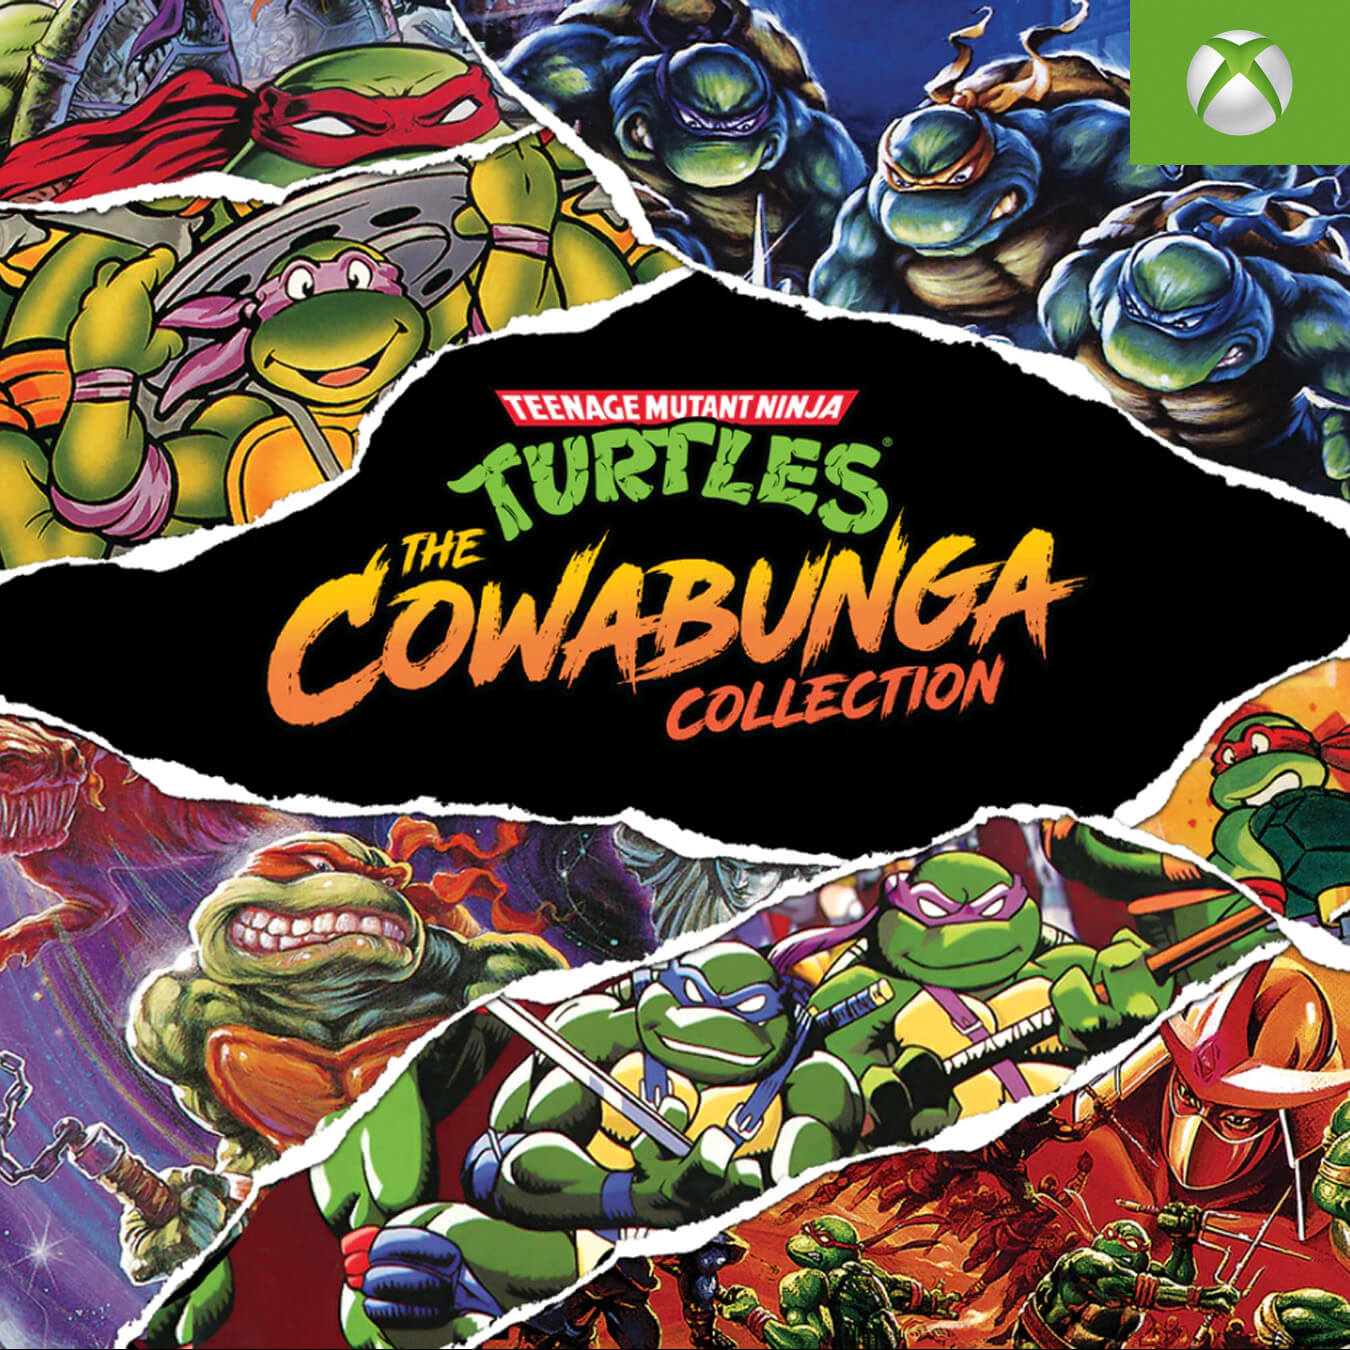 Черепашки ps4. Черепашки ниндзя Cowabunga collection. TMNT Cowabunga collection ps4. Turtles the Cowabunga ps4. Teenage Mutant Ninja Turtles: Cowabunga Coll.